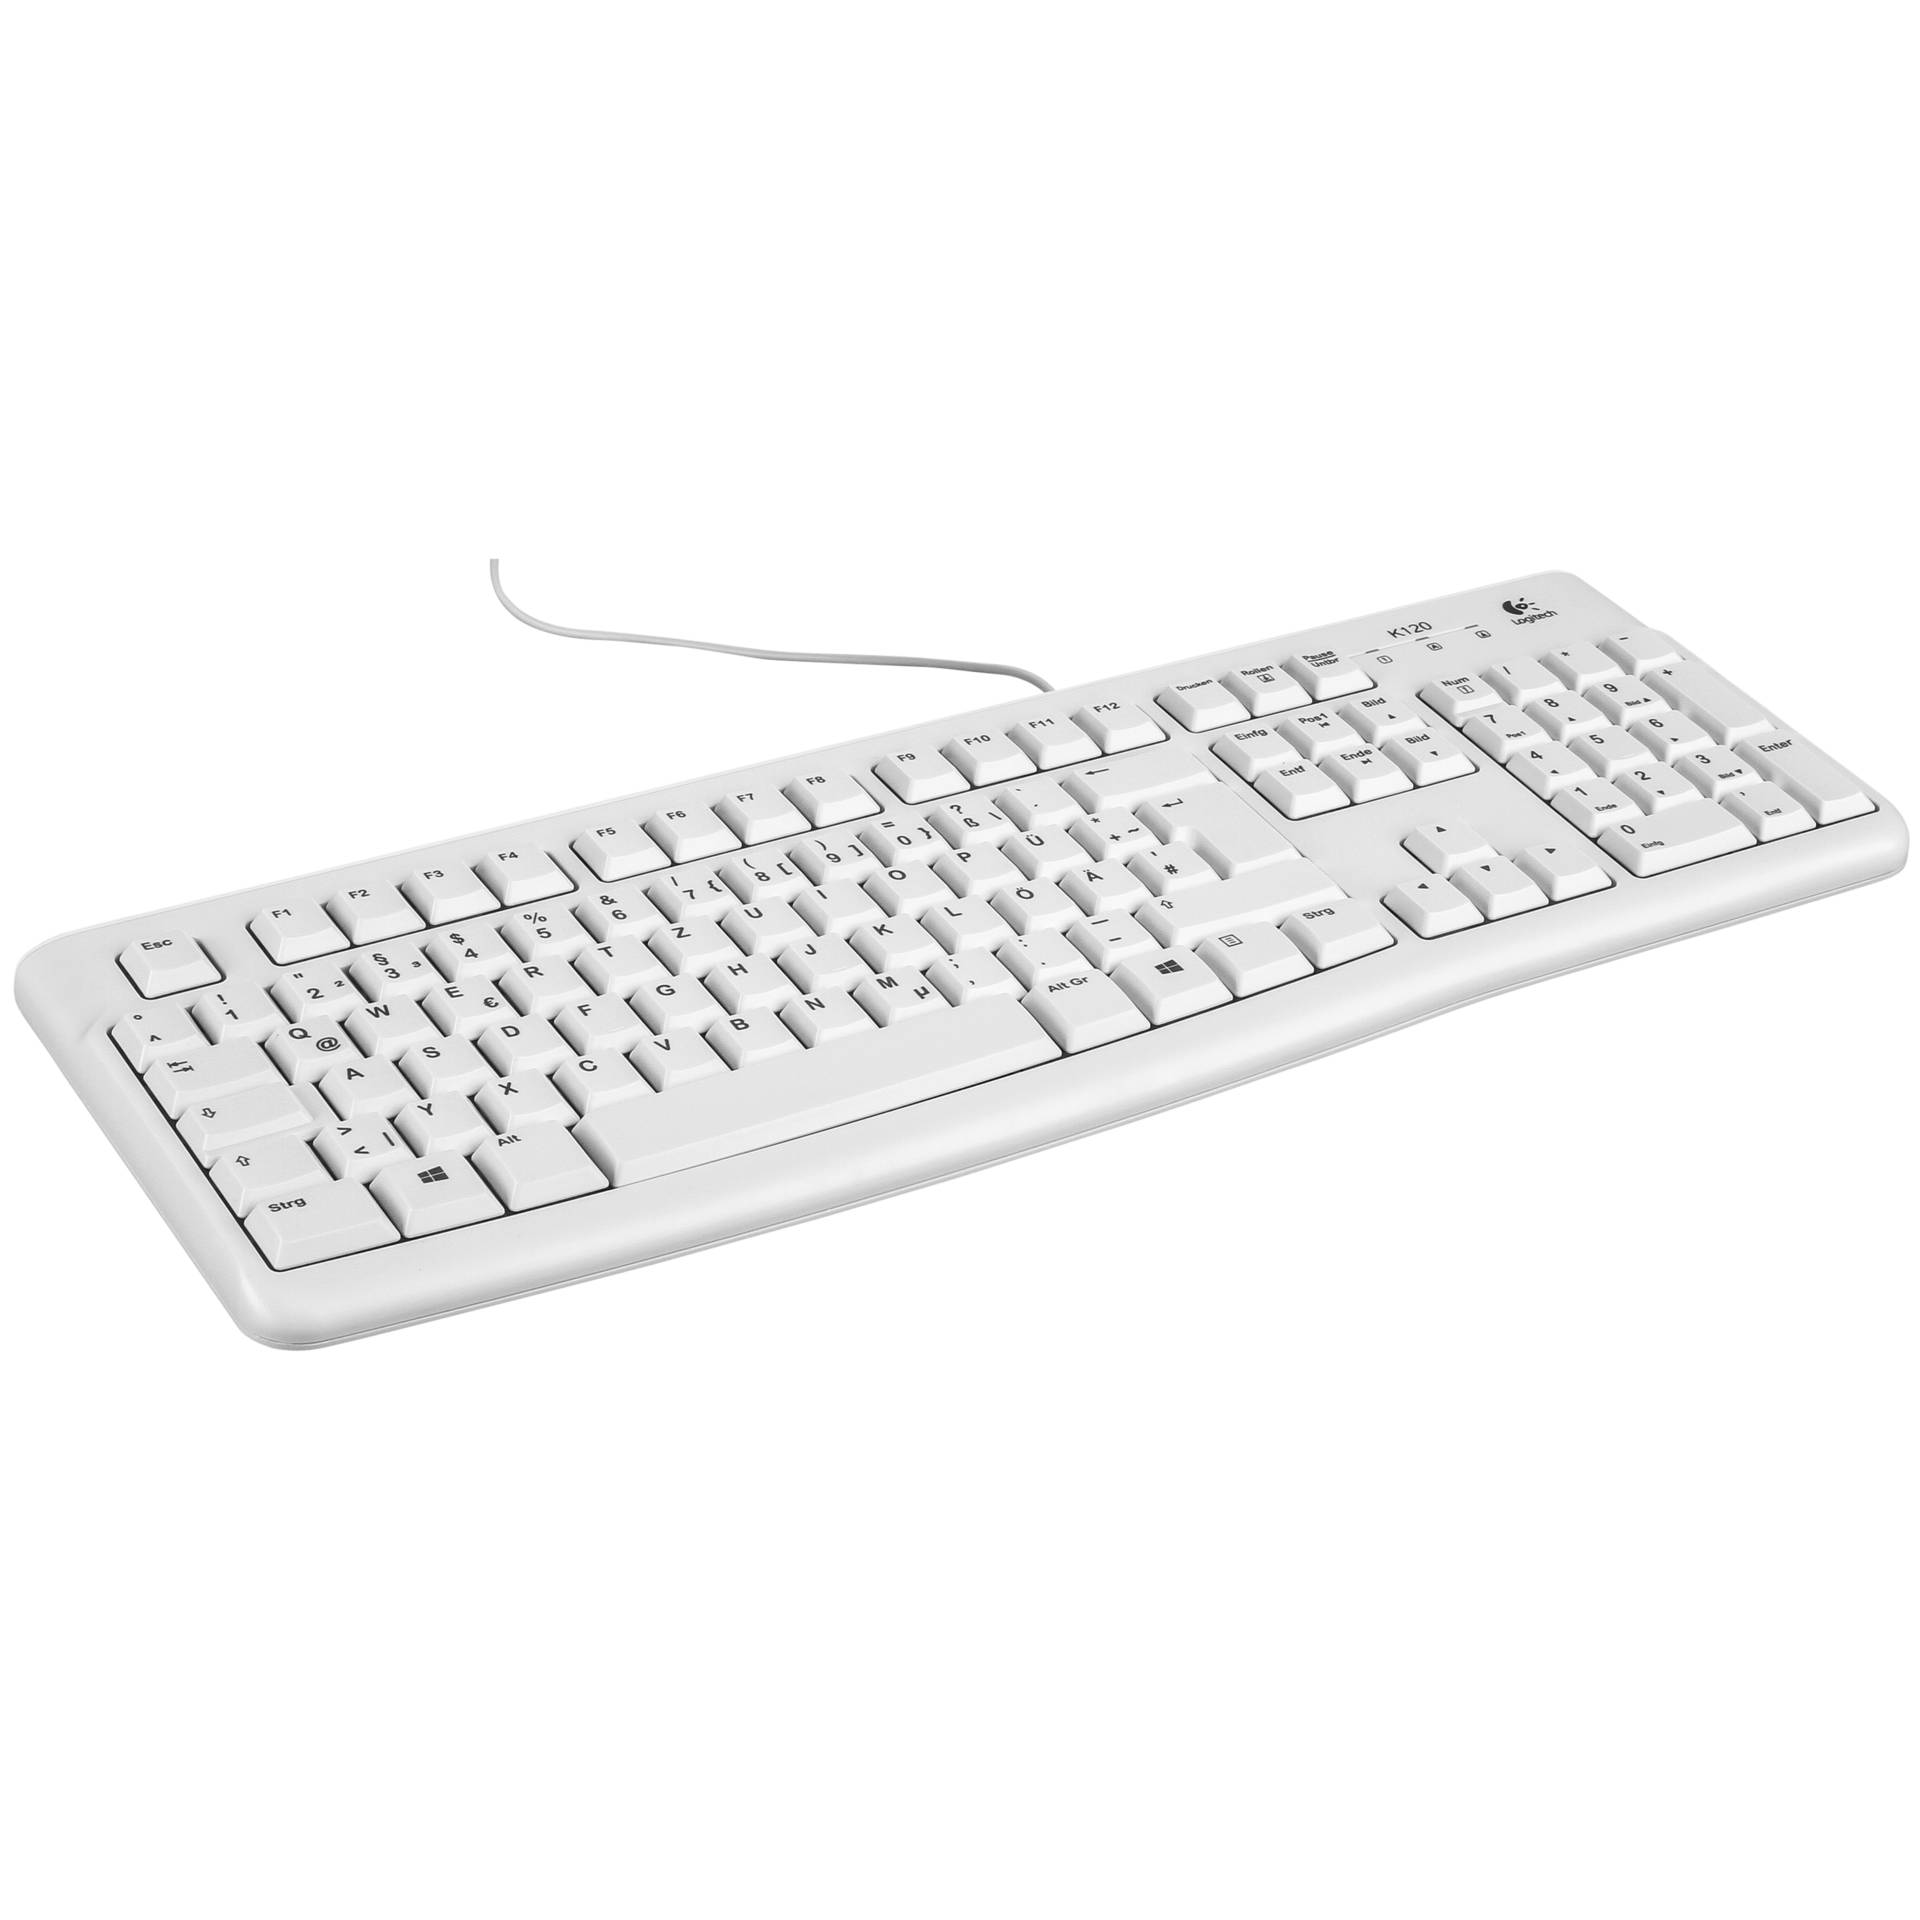 Logitech -K120 for -Deutsch -Tastatur -weiß Business -Logitech Hardware/Electronic